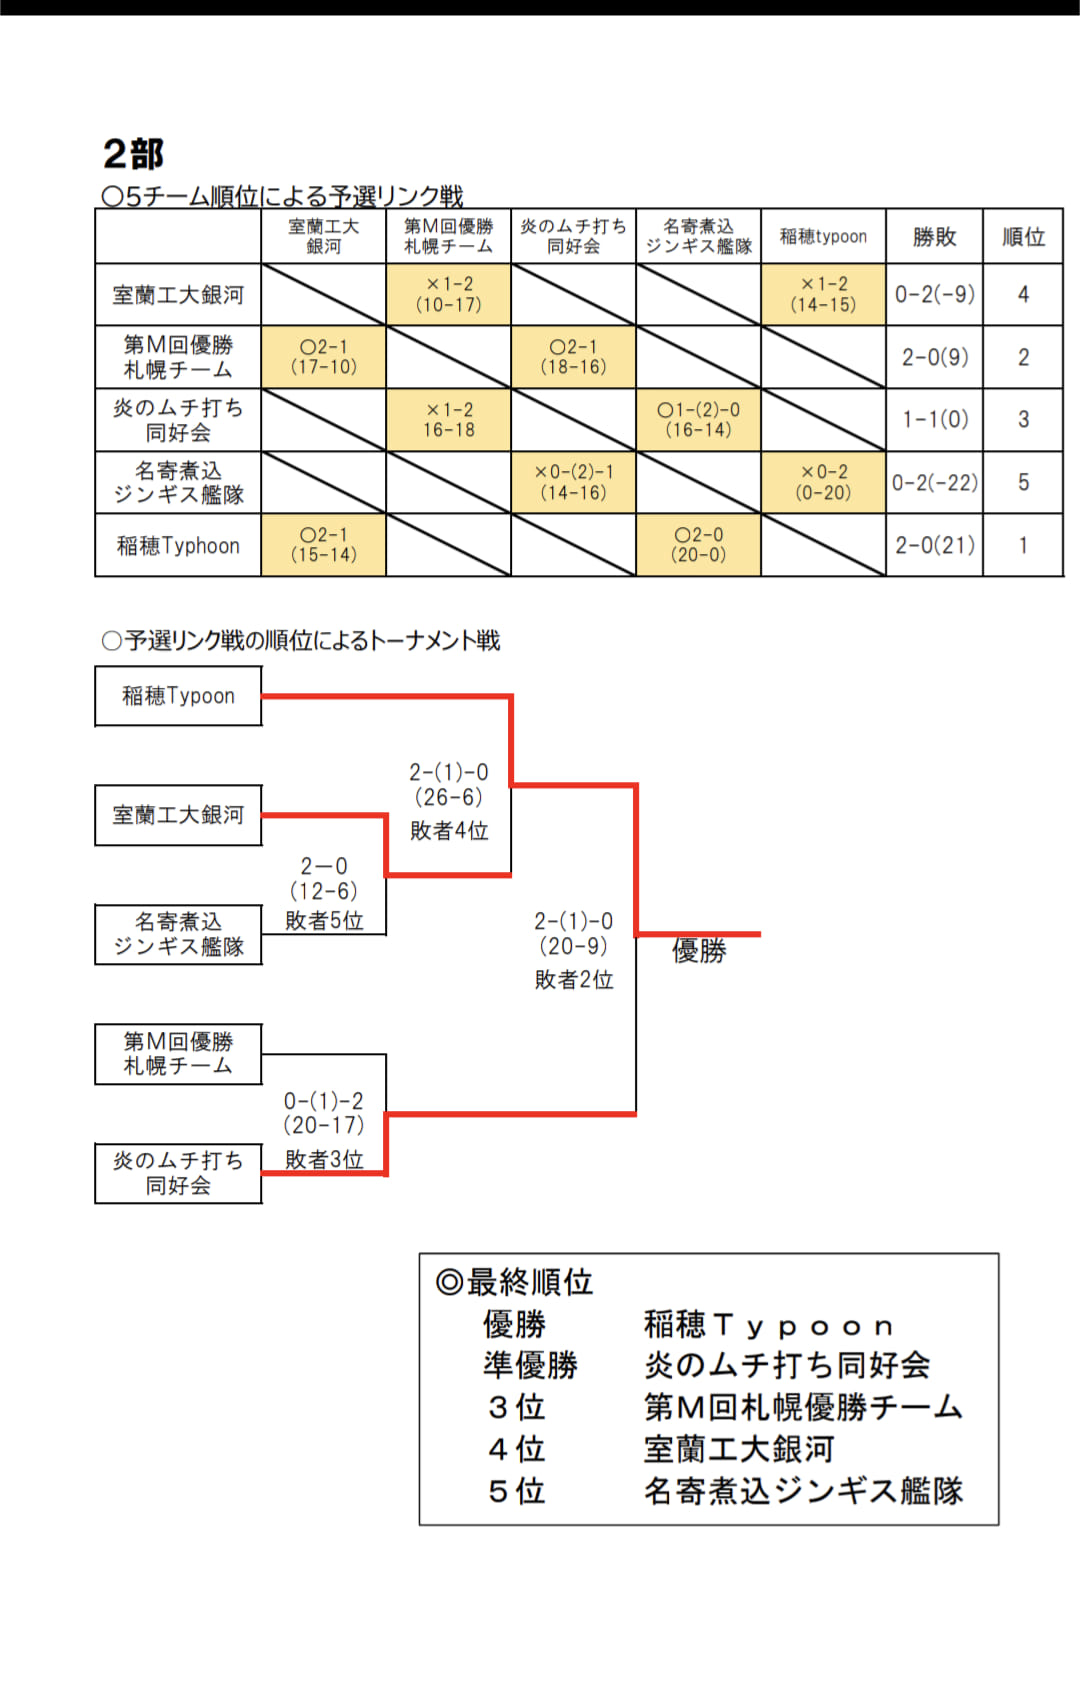 http://www.yukigassen-sapporo.jp/info/up_images/23_%E9%81%93%E9%81%B8%E6%89%8B%E6%A8%A92%E9%83%A8%E7%B5%90%E6%9E%9C.jpg